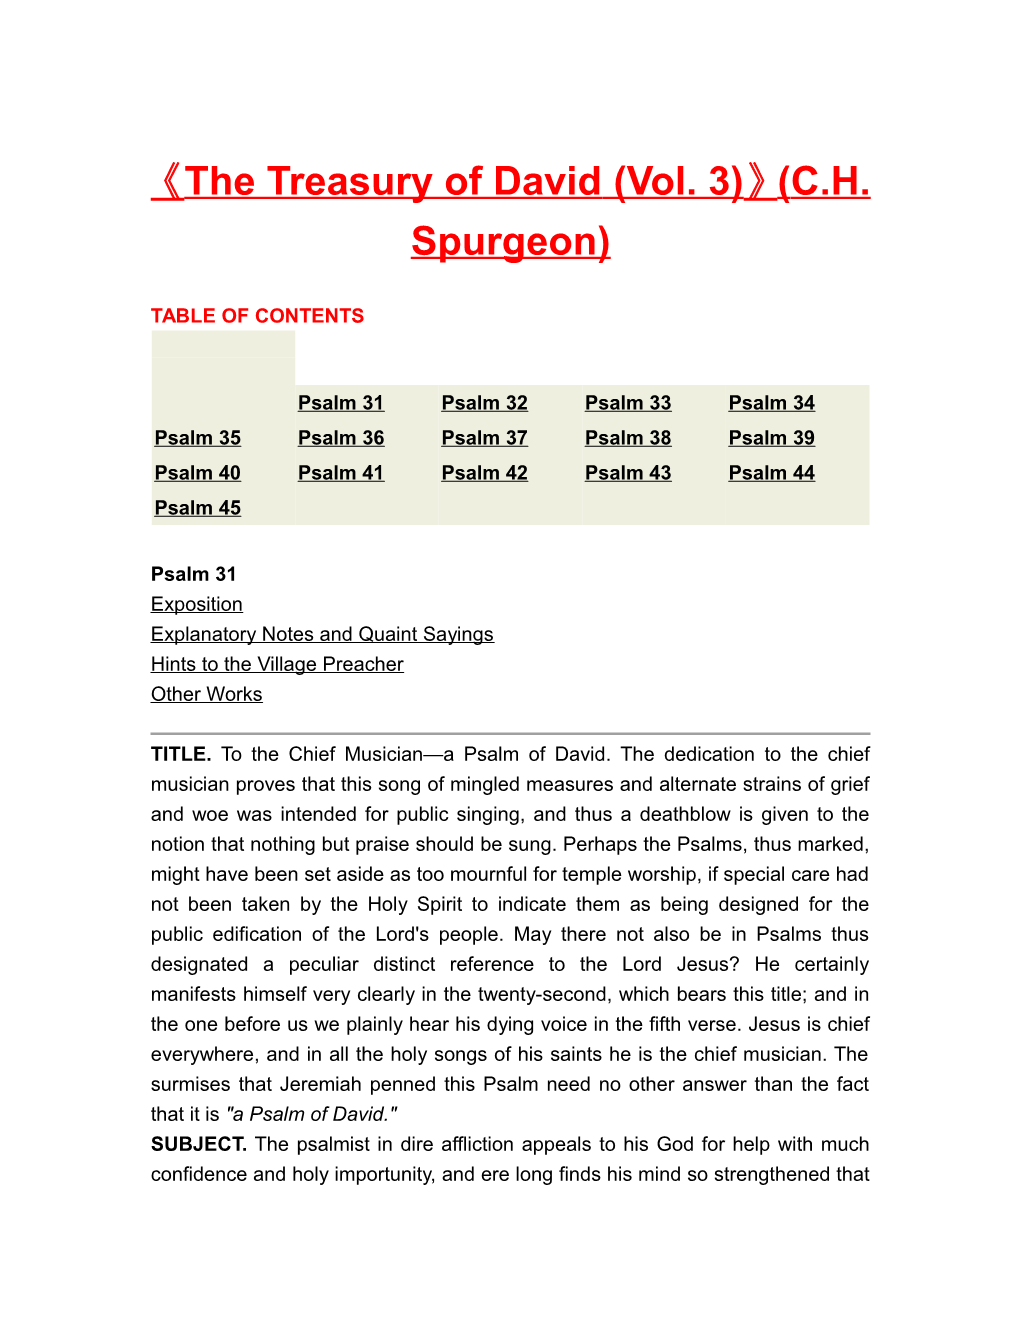 The Treasury of David (Vol. 3) (C.H. Spurgeon)